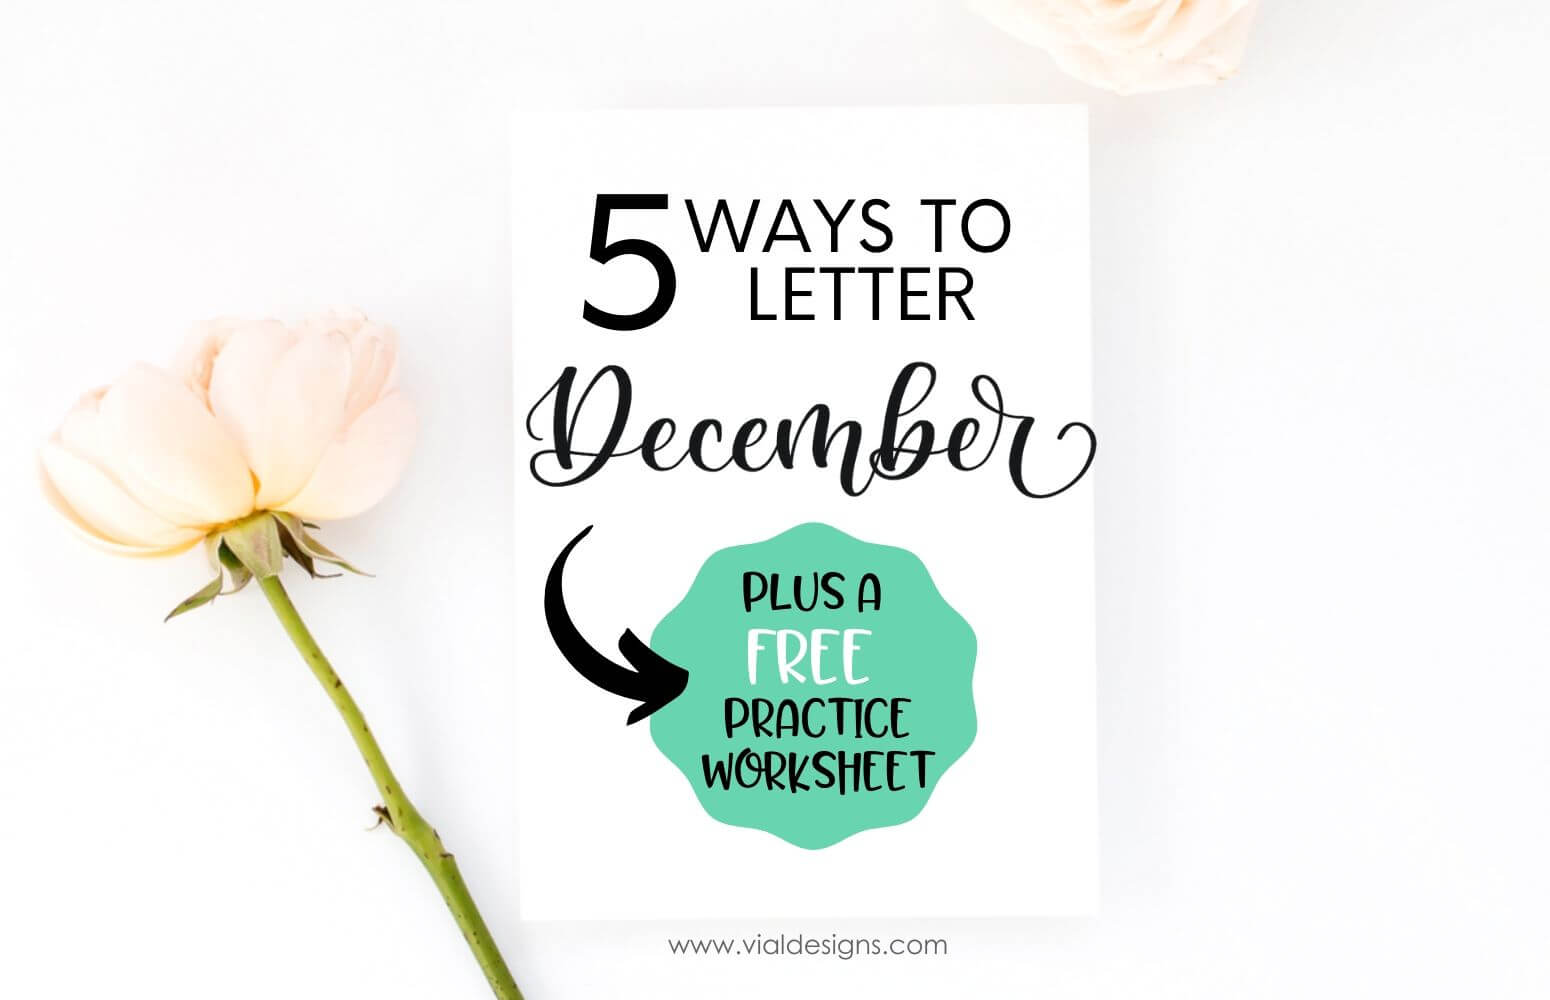 5 Ways To Letter December + Free Worksheet